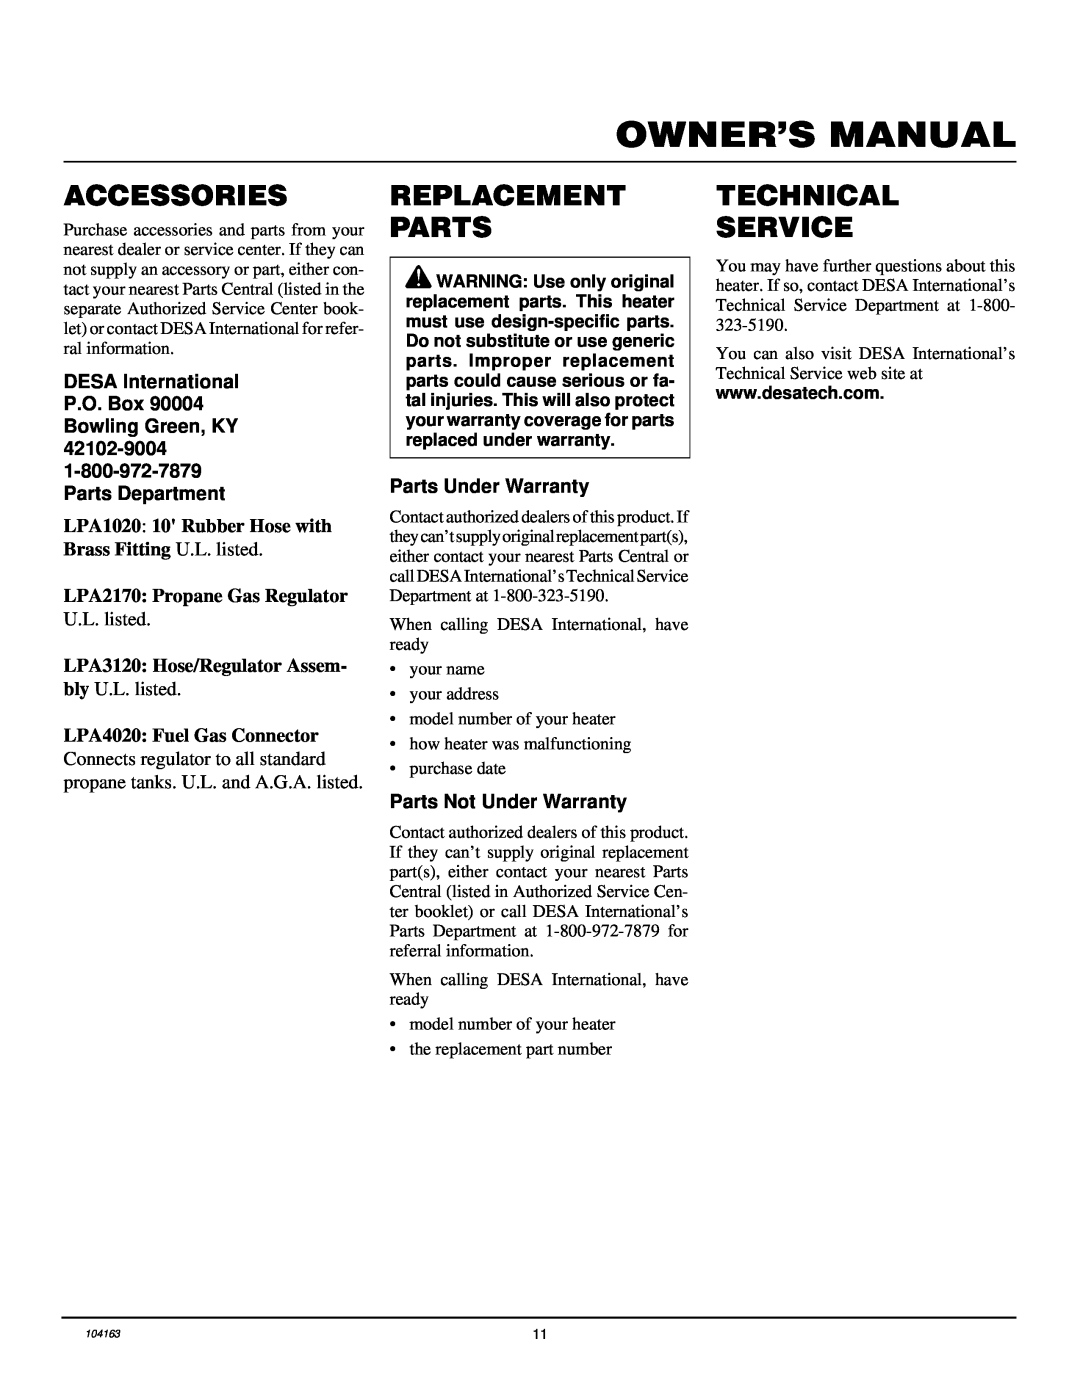 Desa 30LP, BLP30, RLP30 Accessories, Replacement Parts, Technical Service, LPA2170 Propane Gas Regulator, U.L. listed 